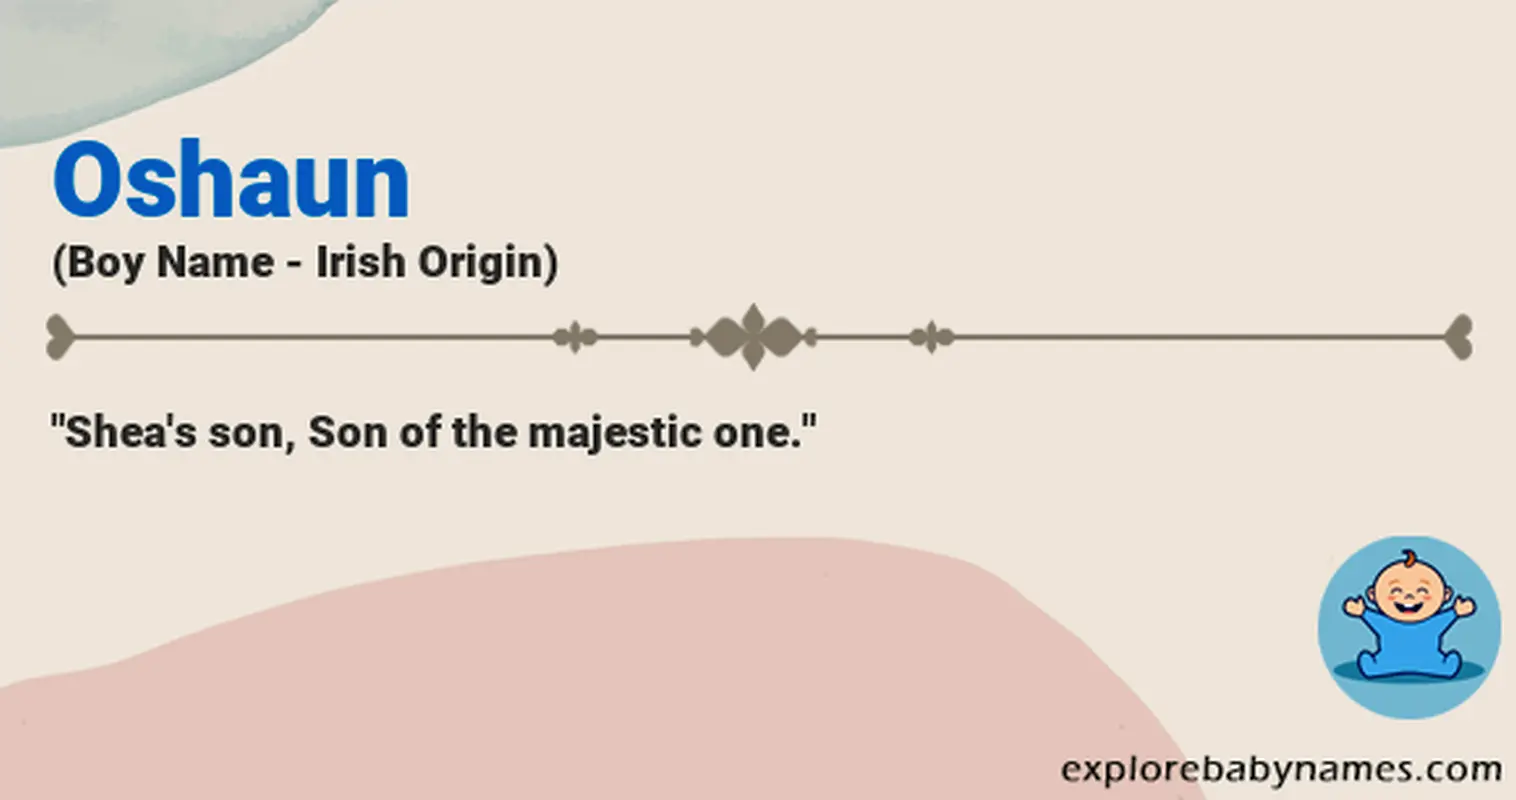 Meaning of Oshaun